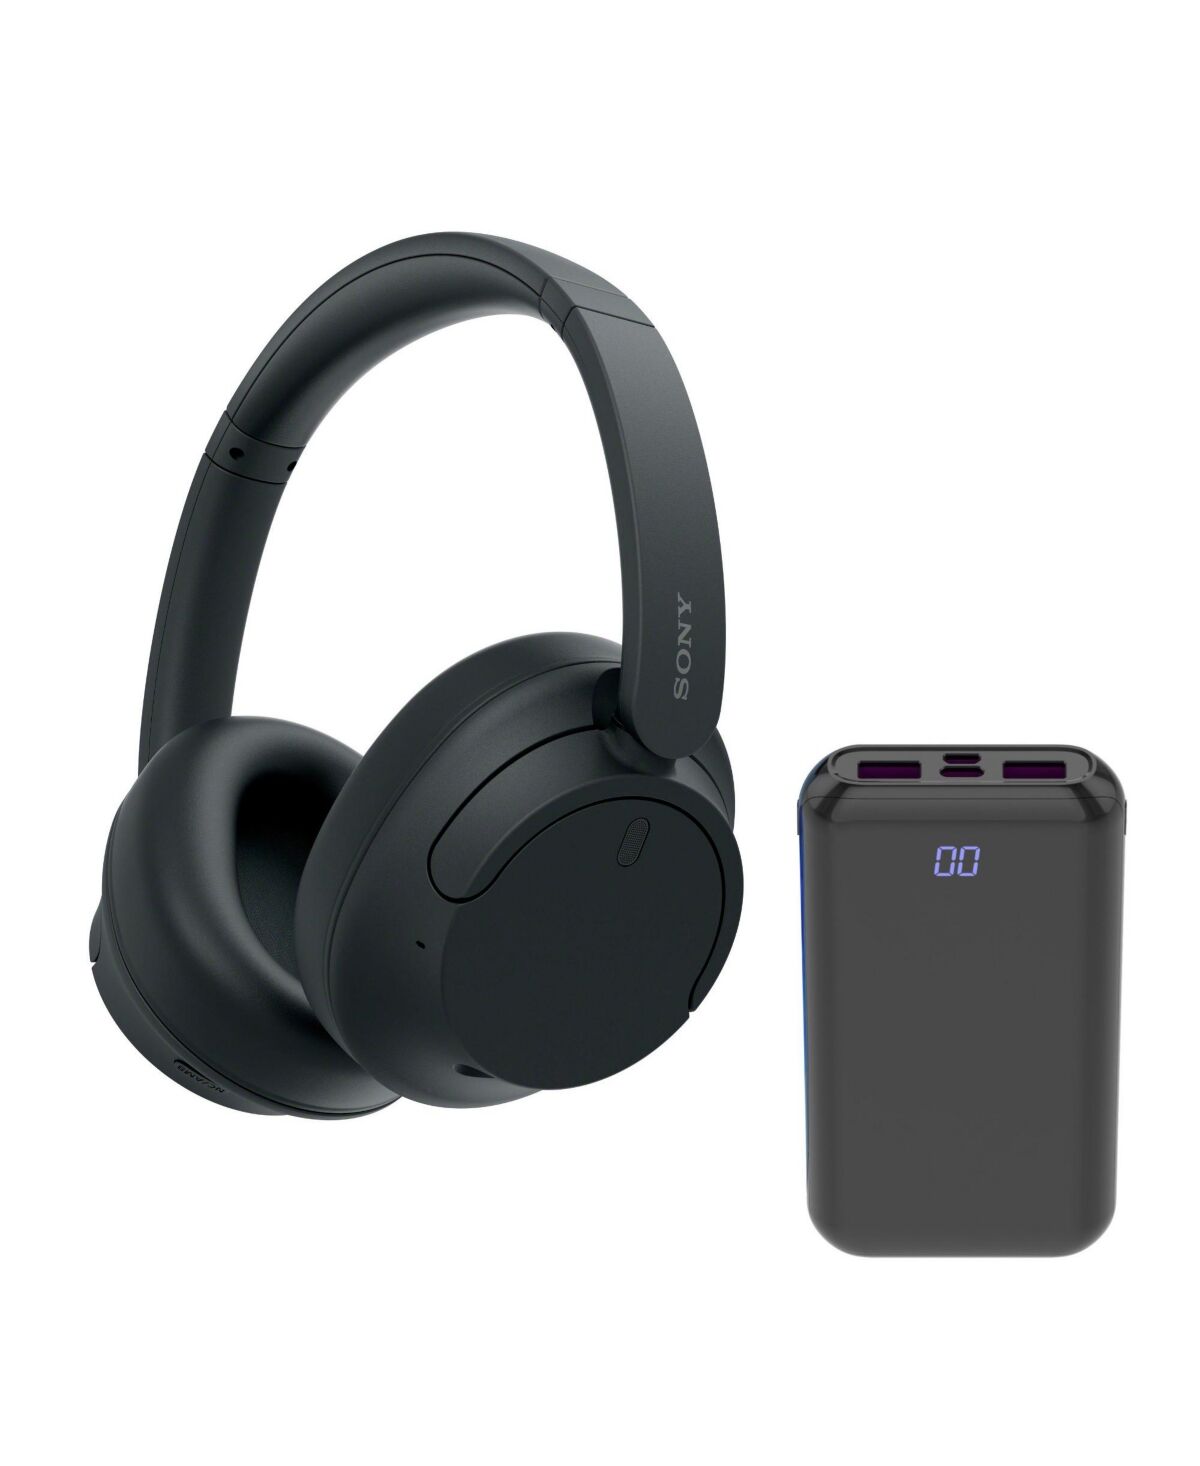 Sony WHCH720N Wireless Over the Ear Noise Canceling Headphones (Black) Bundle - Black